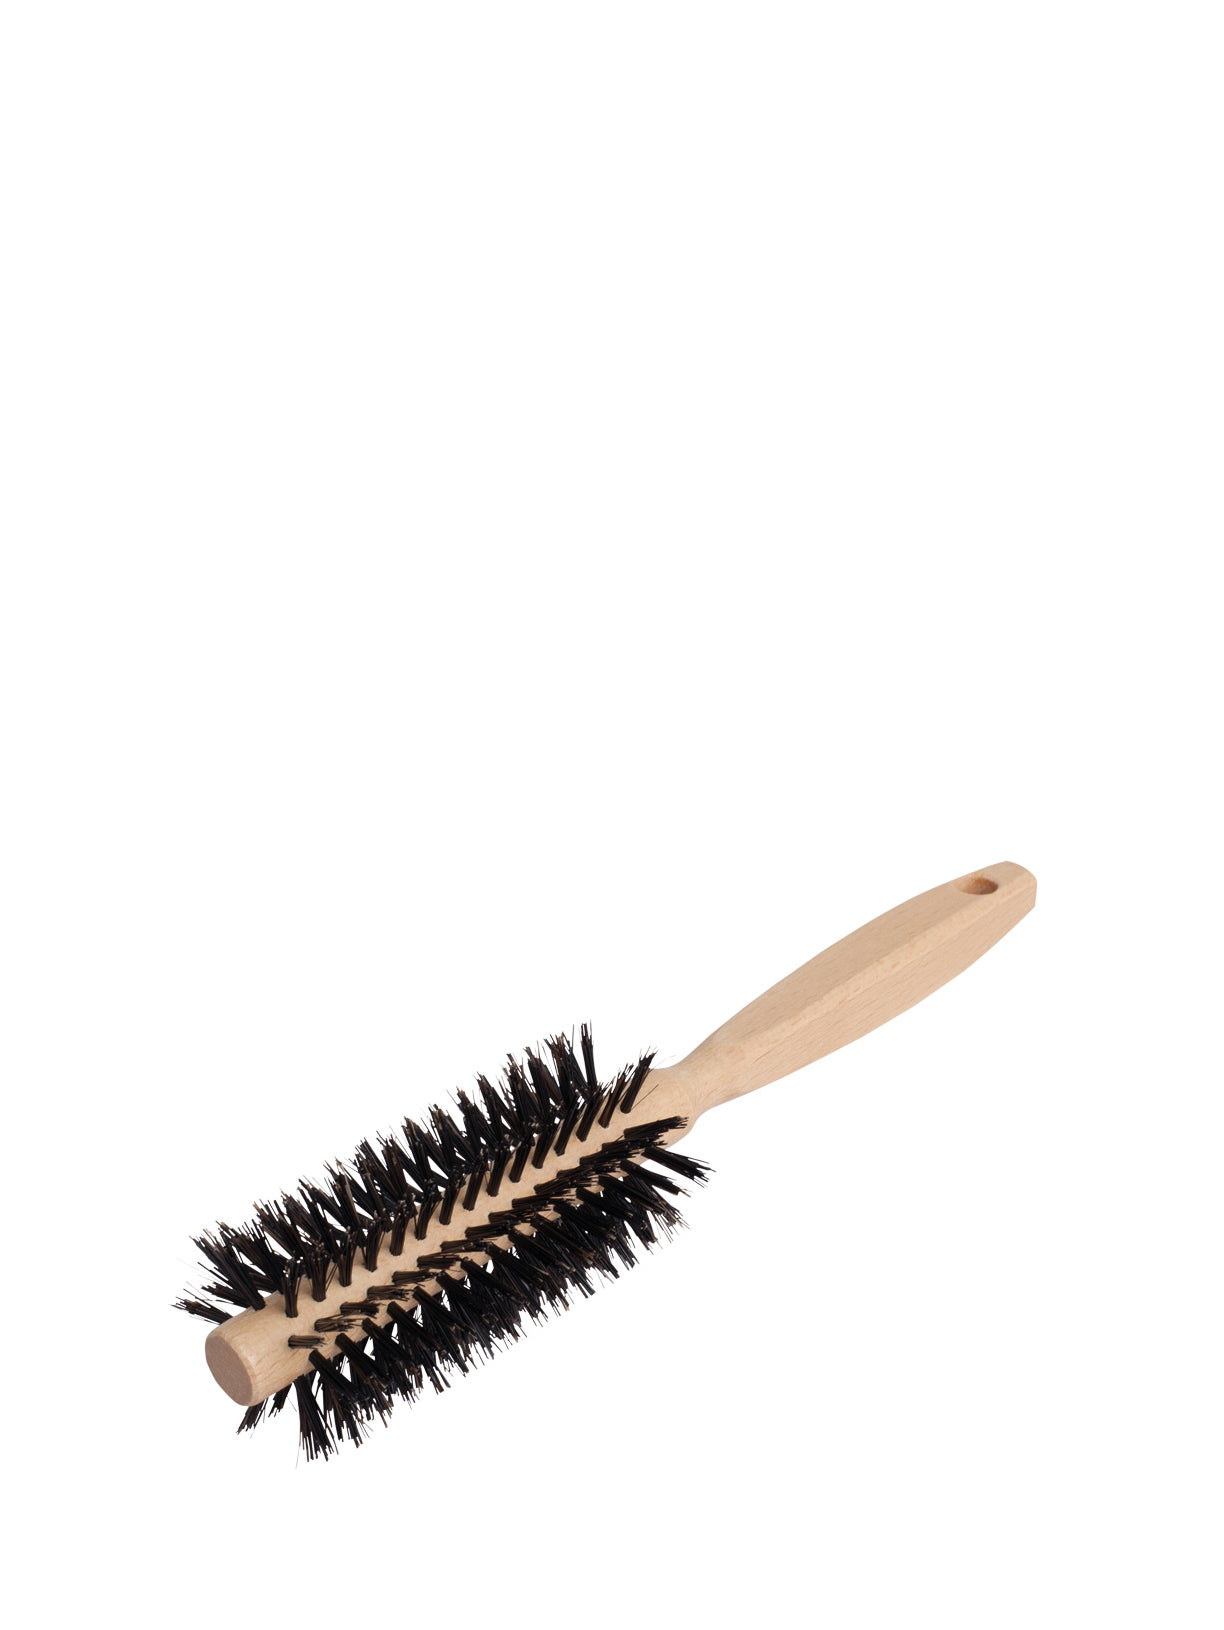 Roundshape hairbrush, wild boar bristle